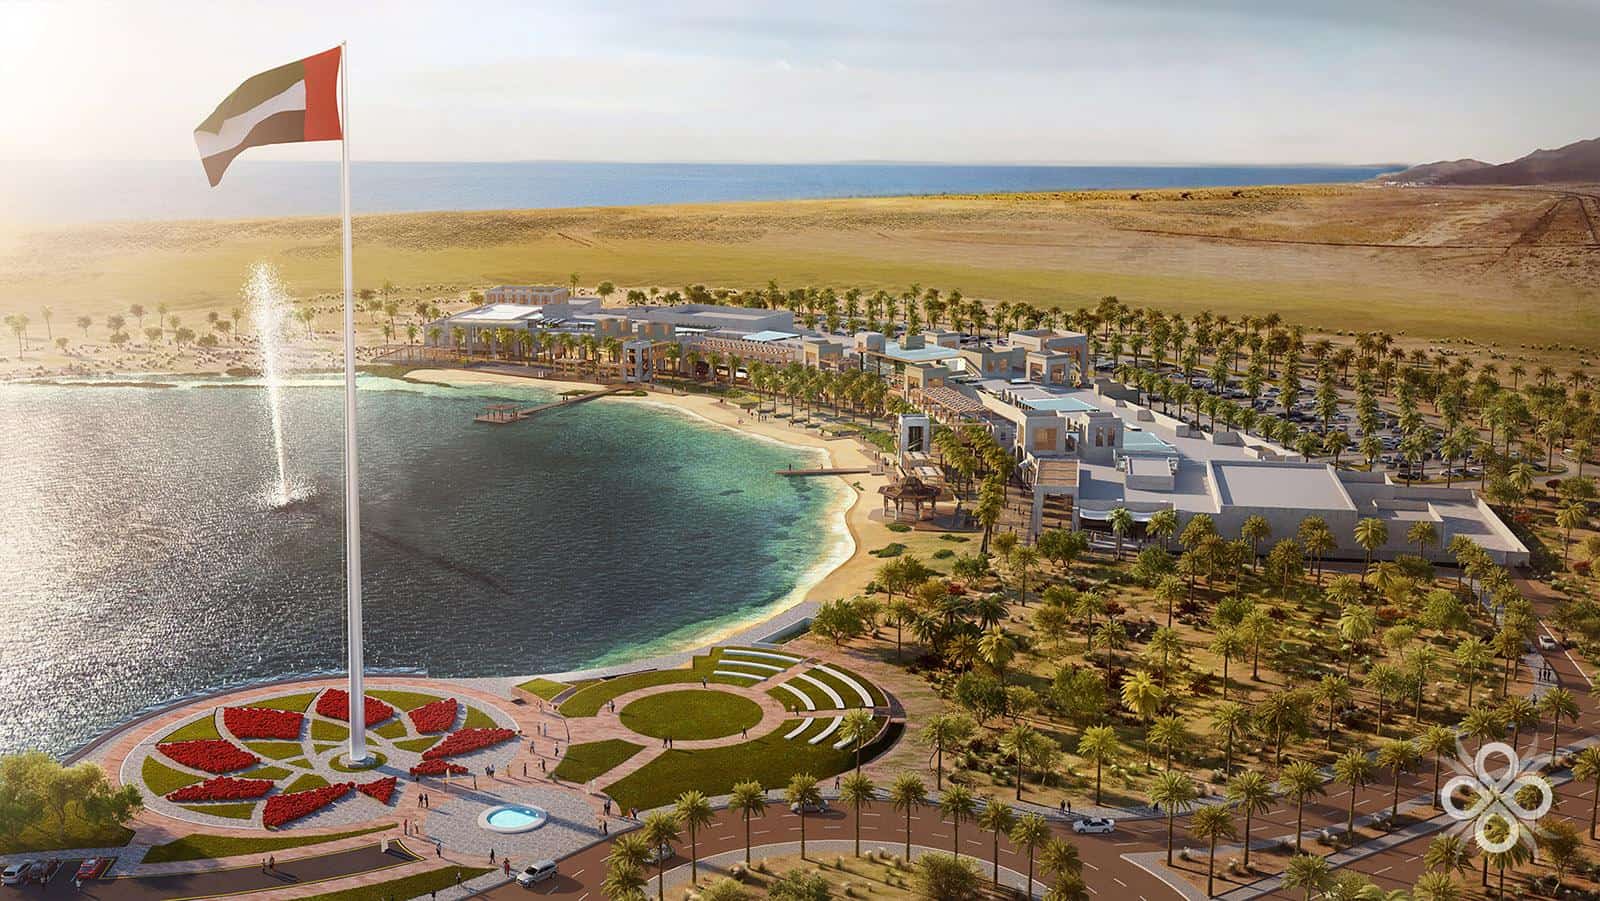 Kalba waterfront development project Sharjah